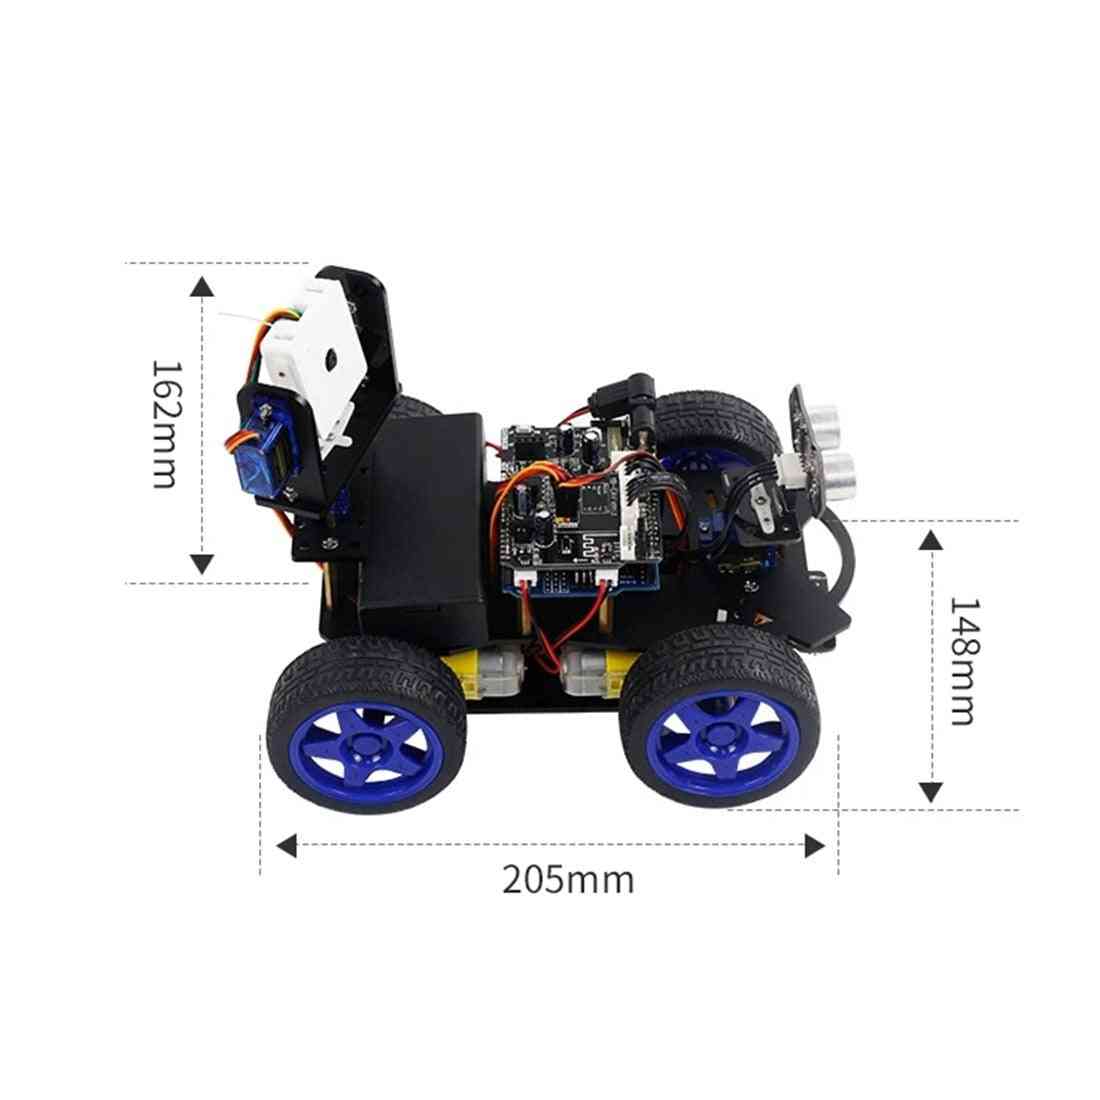 Luminescent Ultrasonic Module, Smart Robot Car, Wifi Camera, Gimbal Kit For Arduino